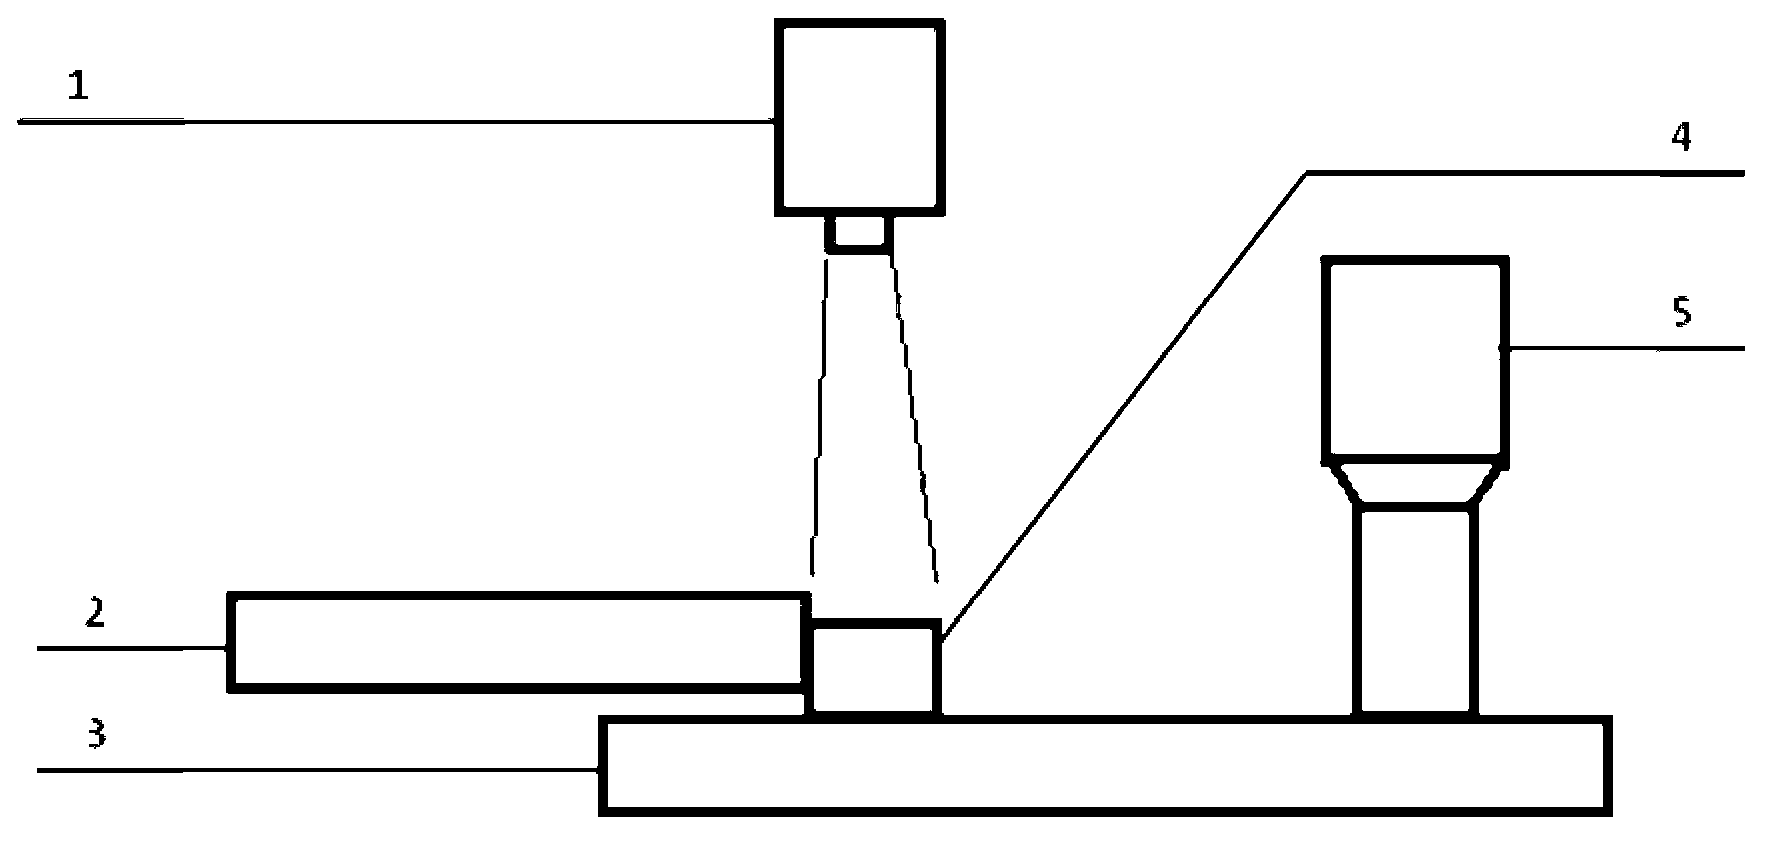 Laser brazing method for TiNi (titanium-nickel) shape memory alloy and dissimilar light metal